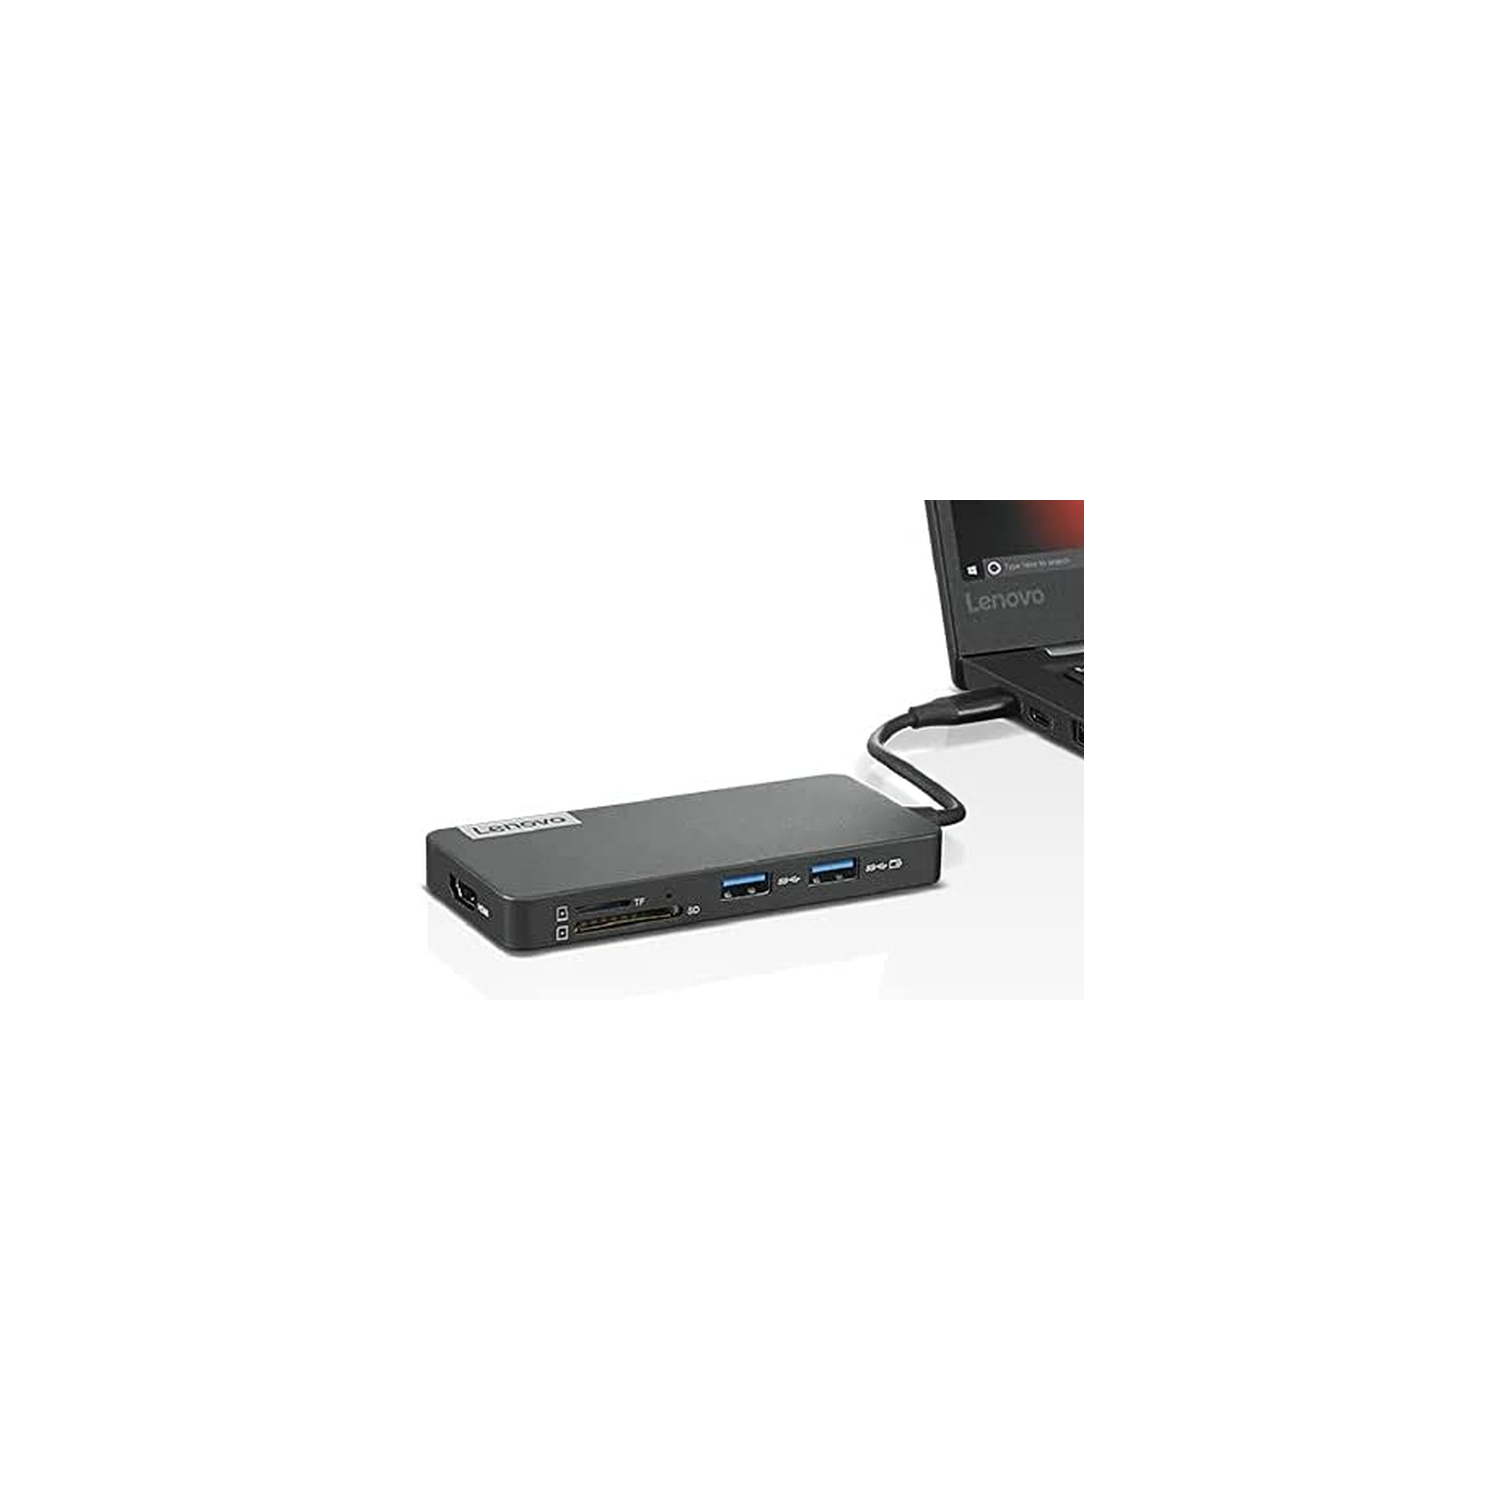 Lenovo USB-C 7-in-1 Hub + Video Display Adapter w/ HDMI 1.4, USB-C Charging, 2x USB 3.0, 1x USB 2.0, 2x Card Readers